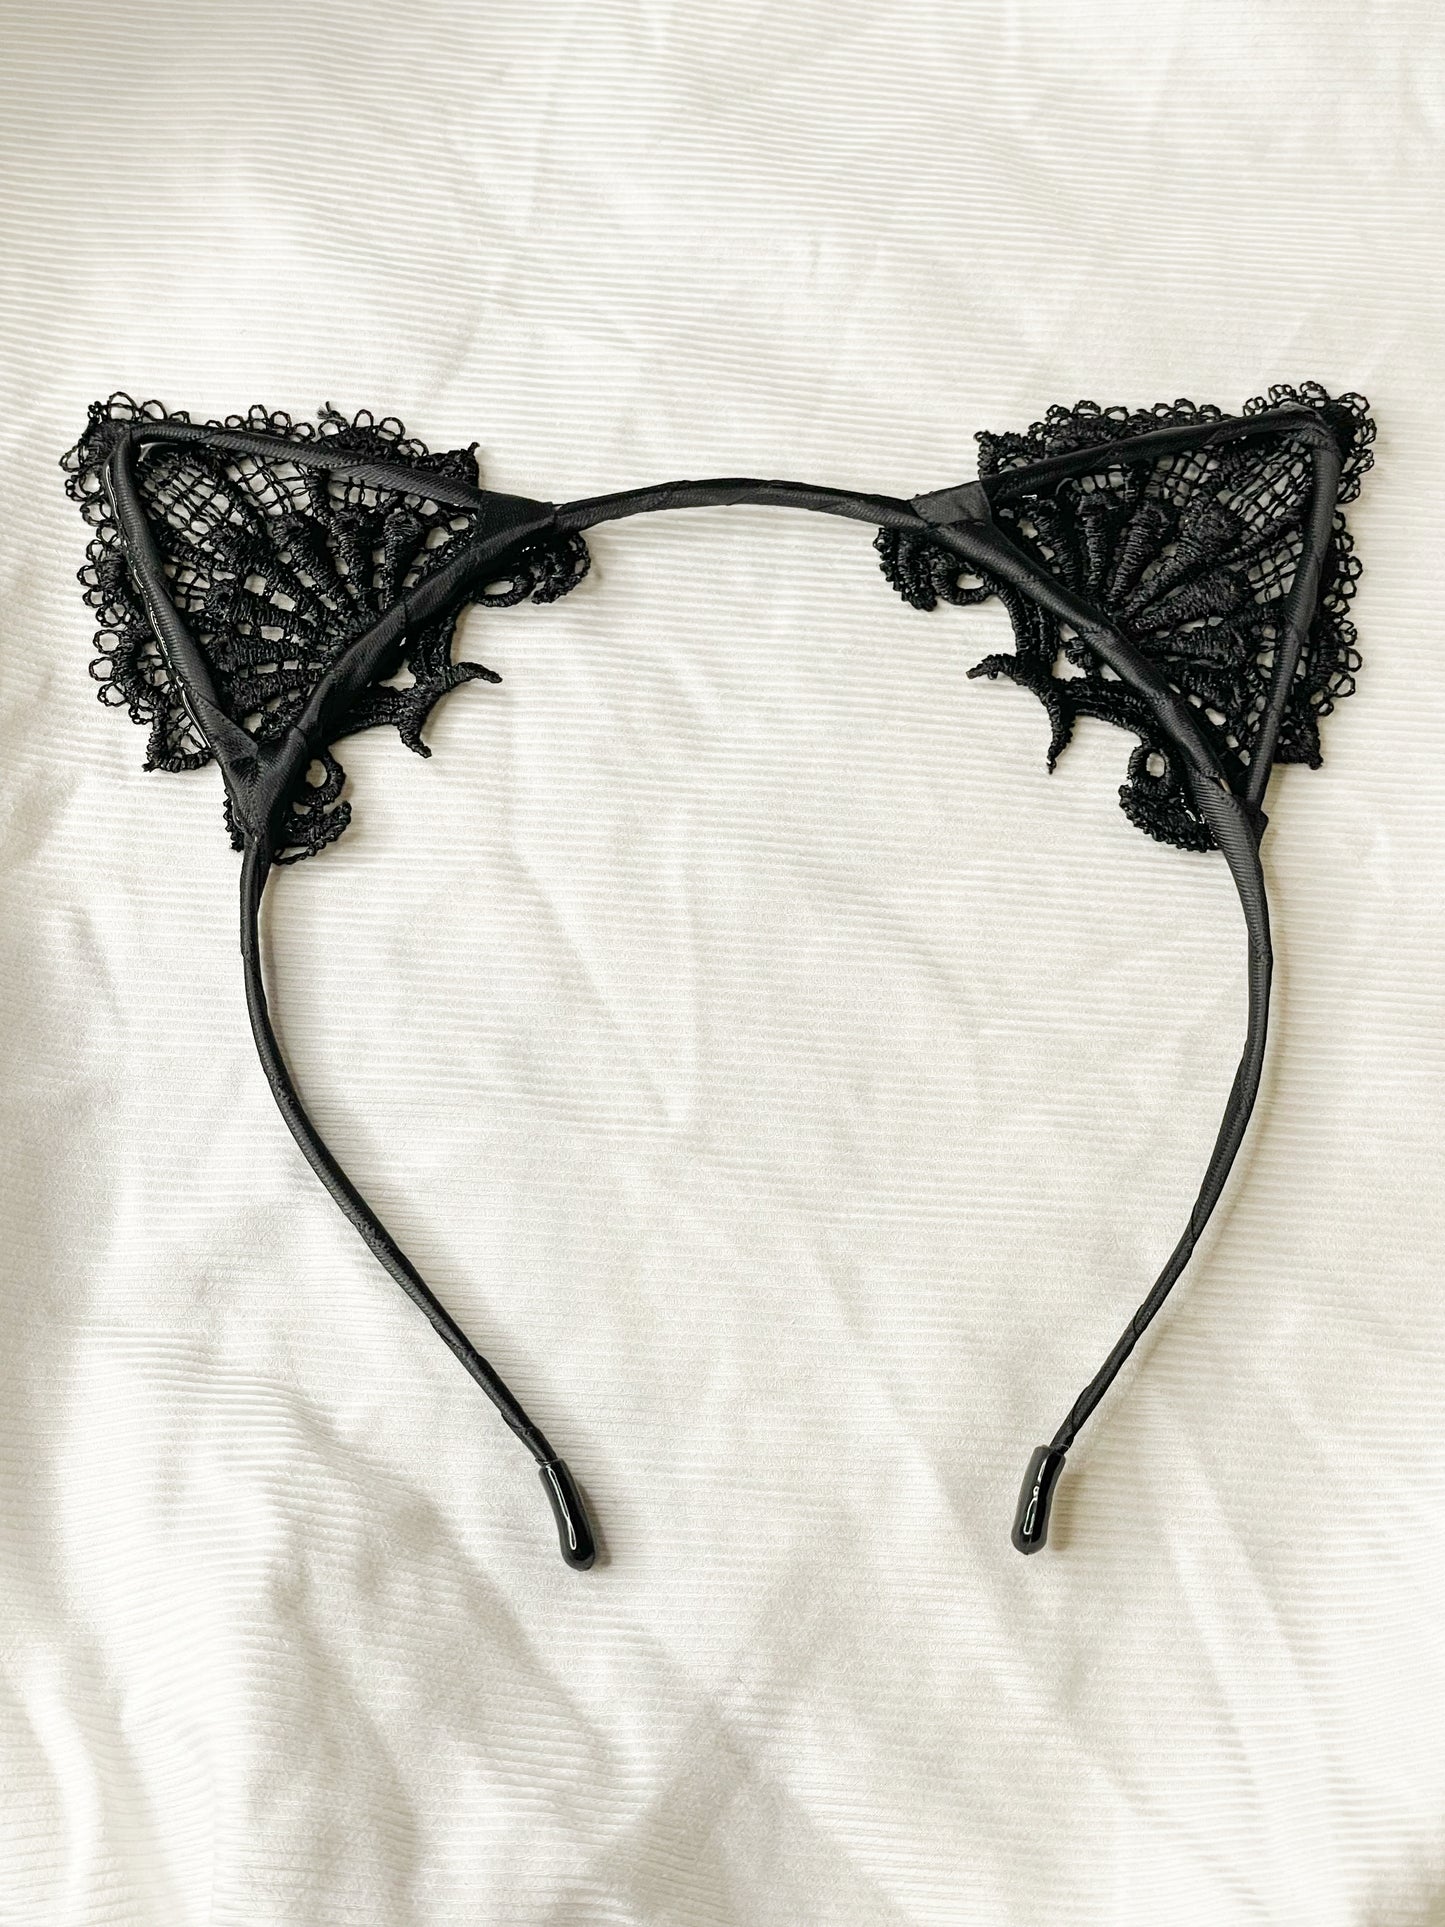 Black Lace Cat Ears Headband